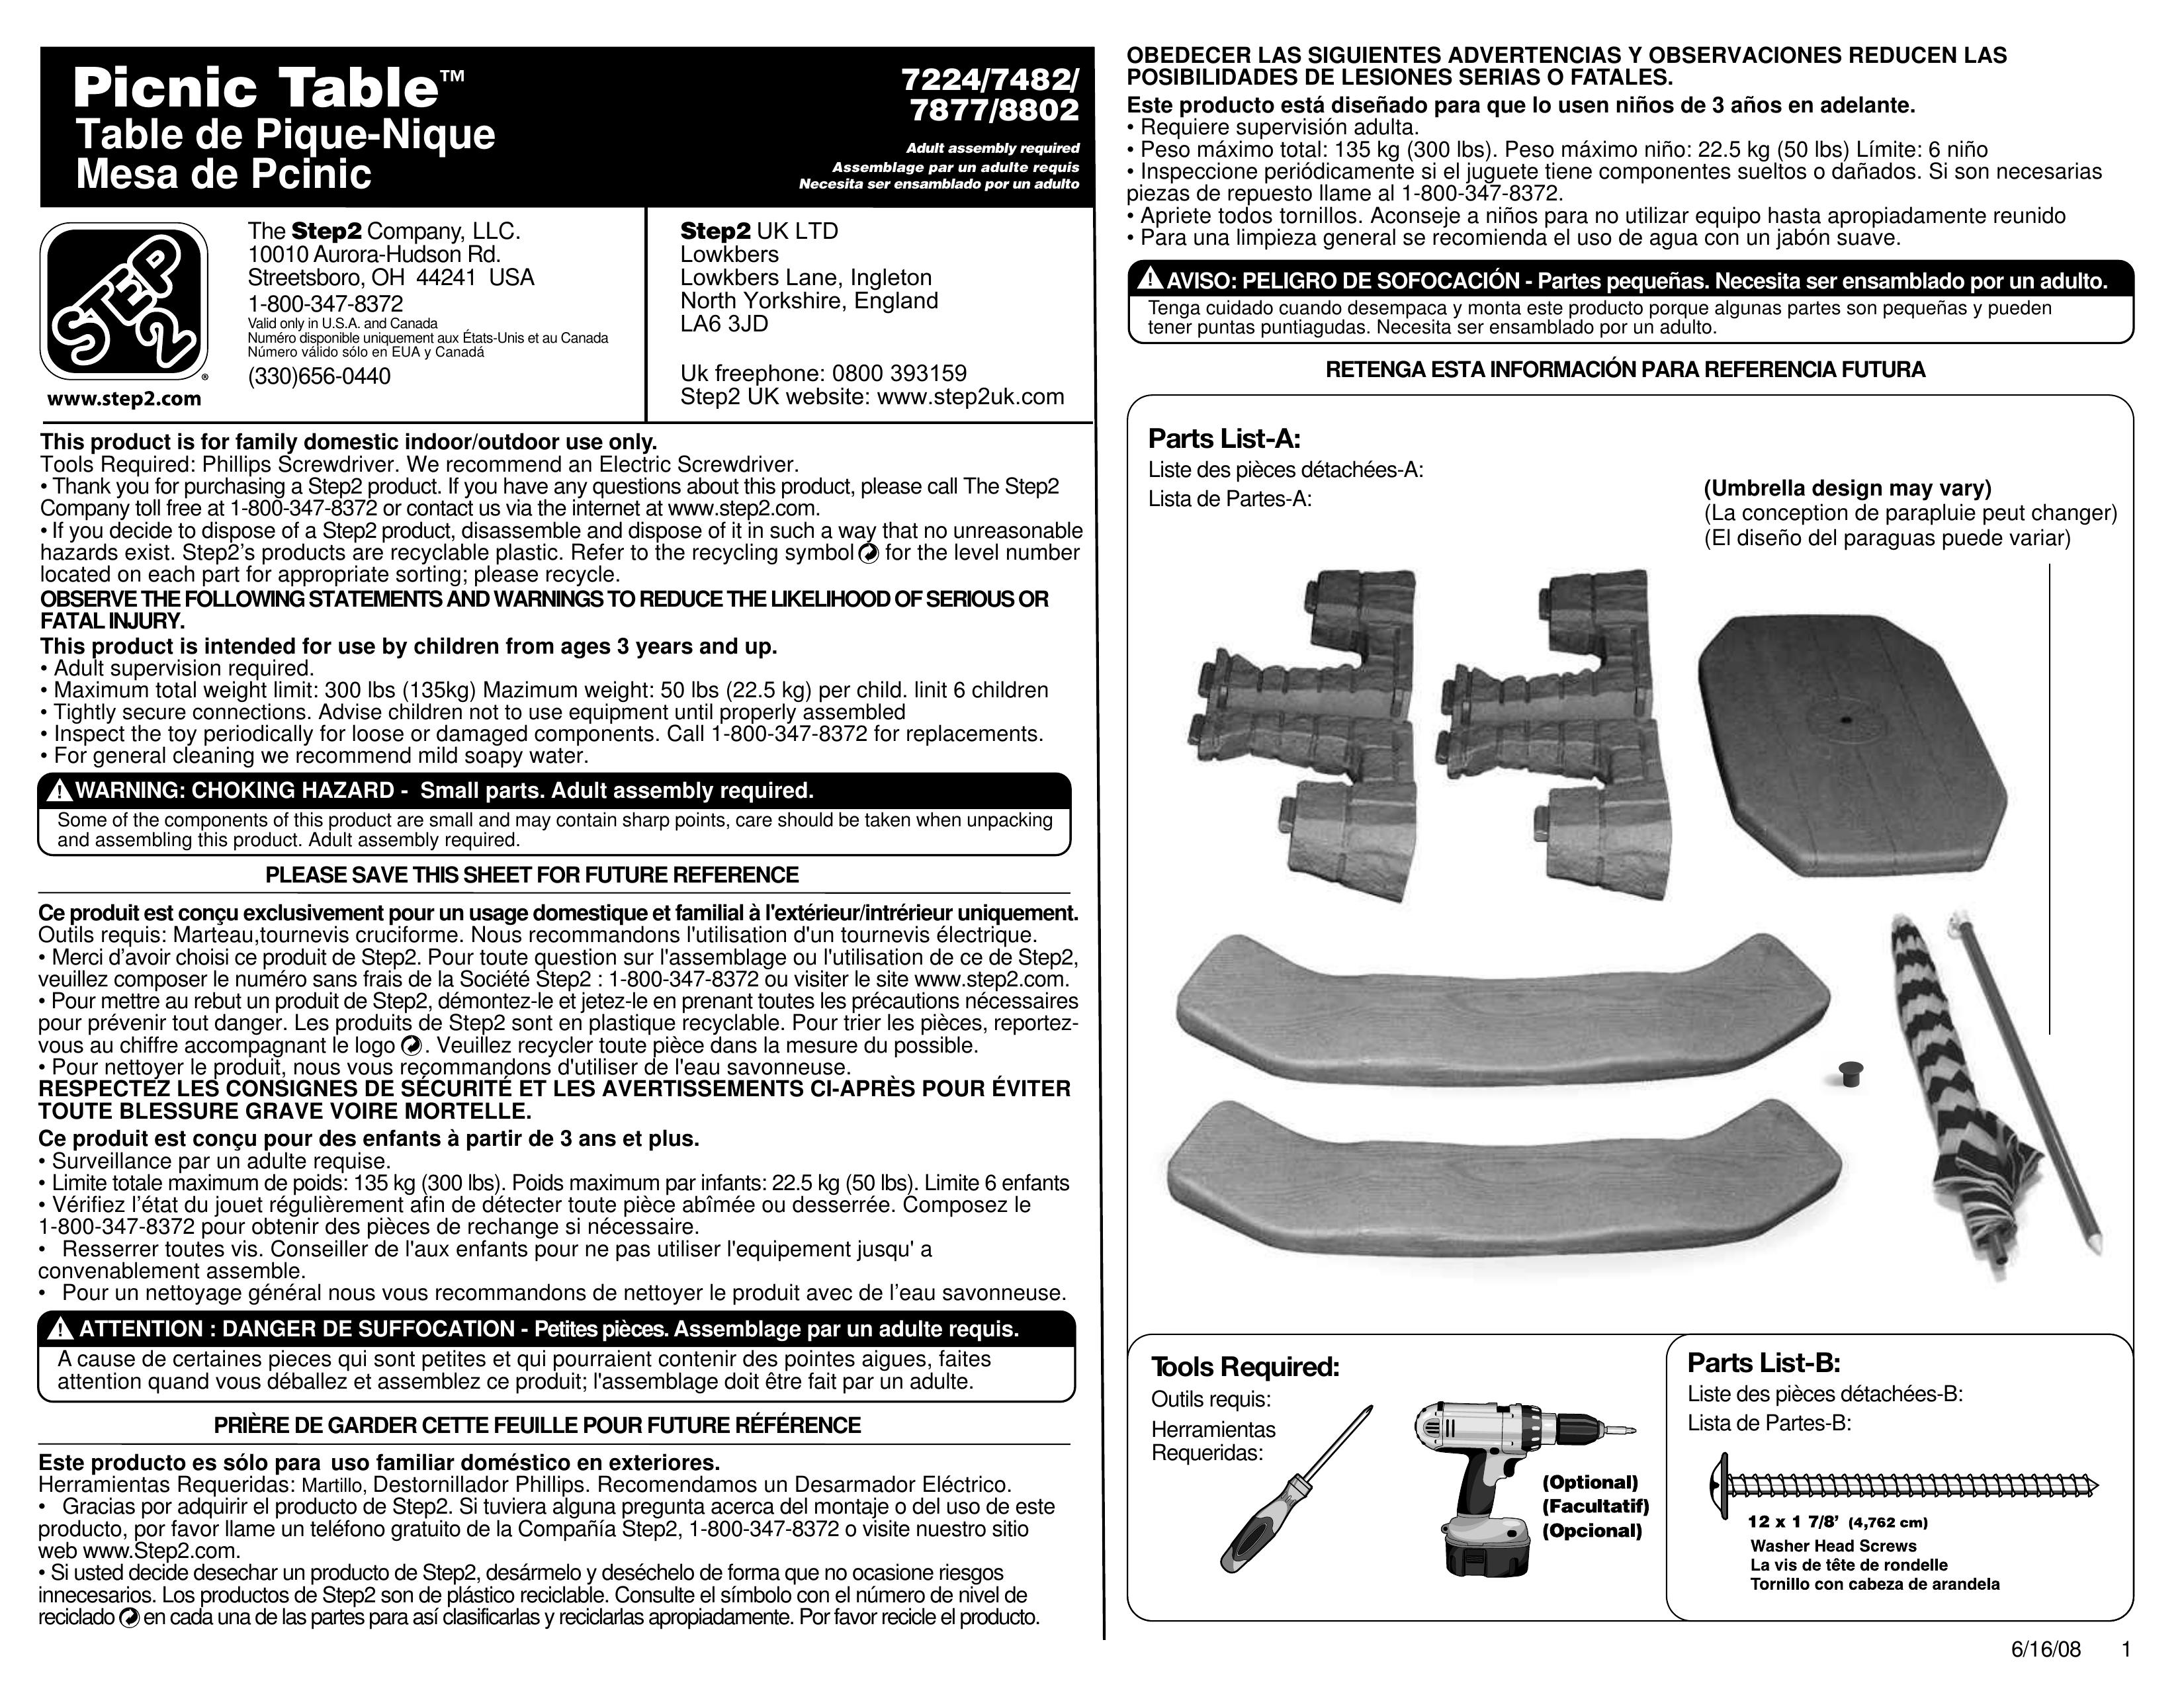 Step 2 7877 Picnic Table User Manual